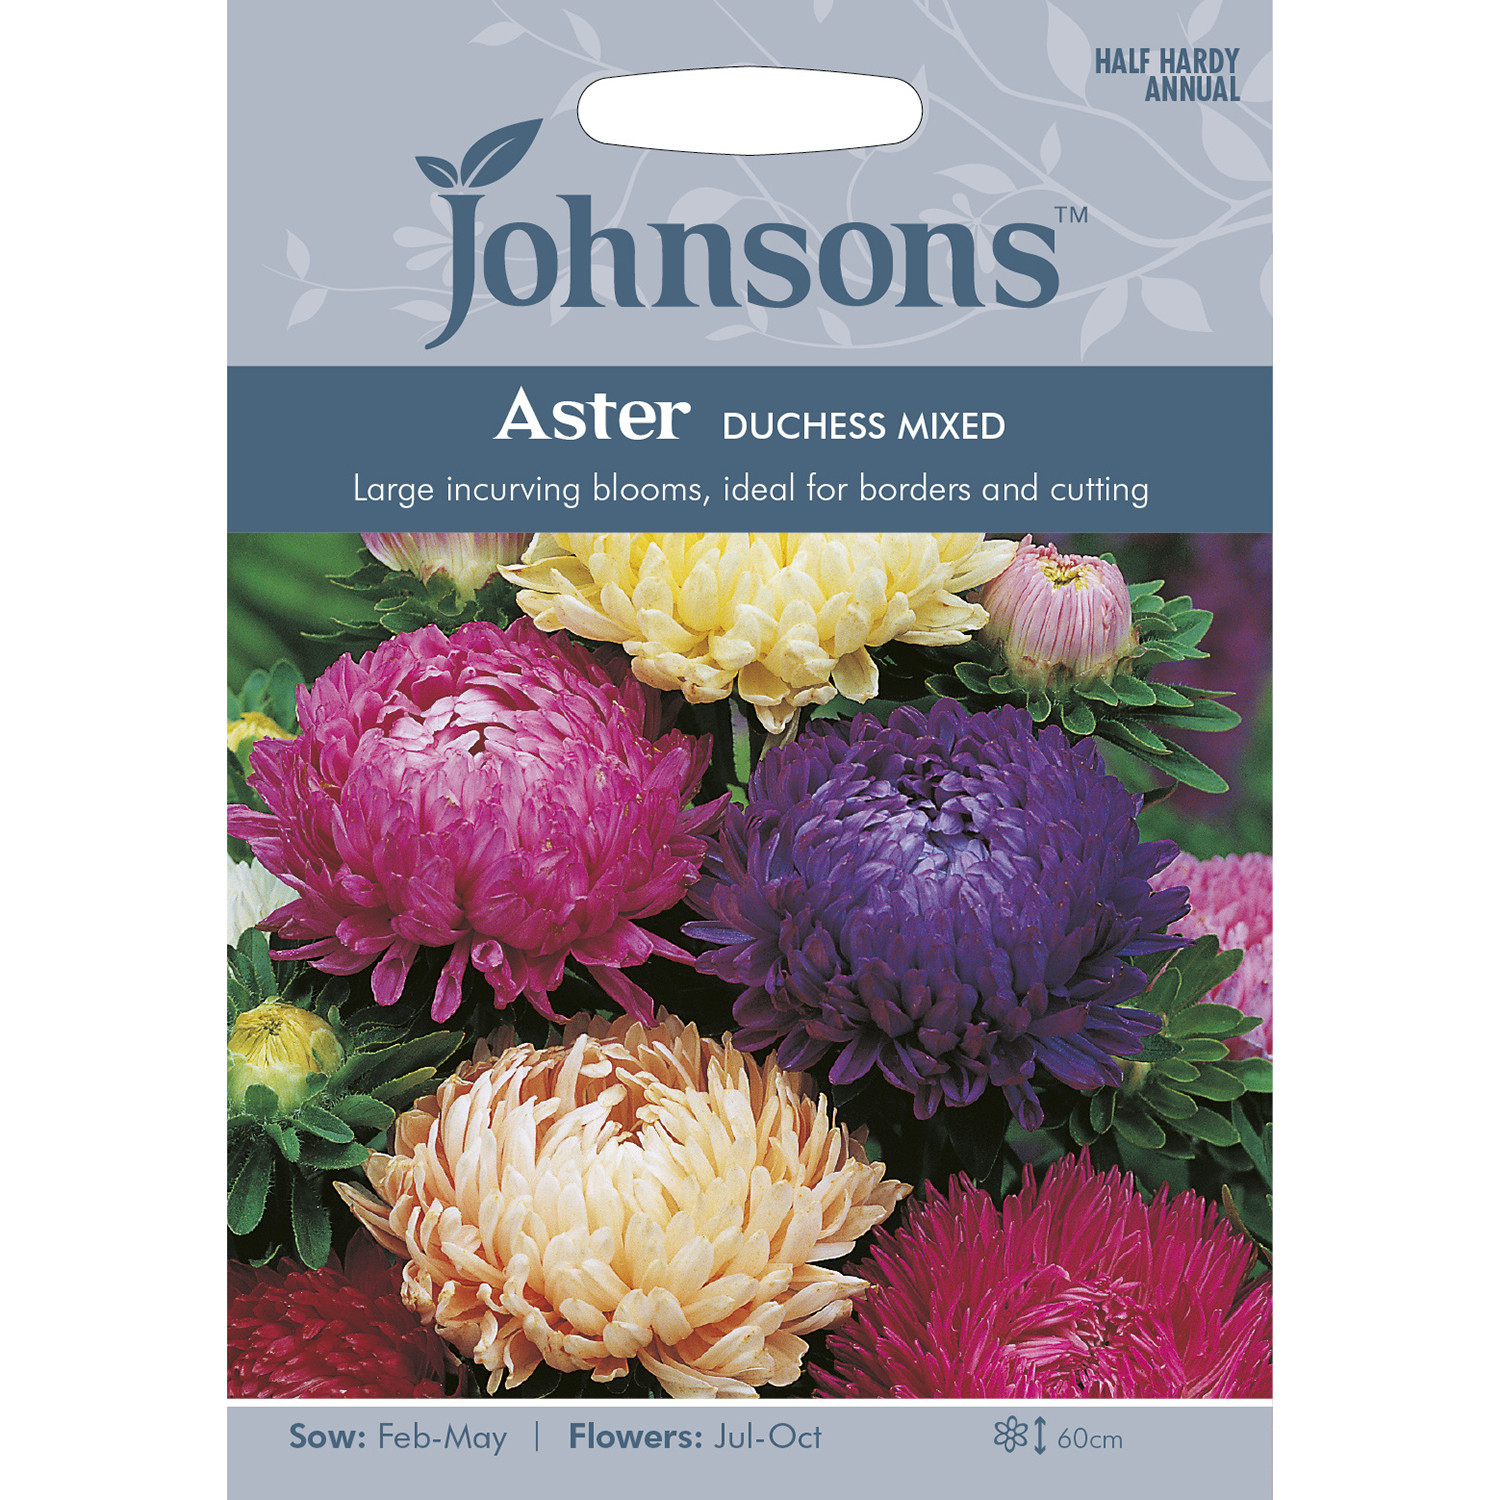 Johnsons Aster Duchess Mixed Flower Seeds Image 2